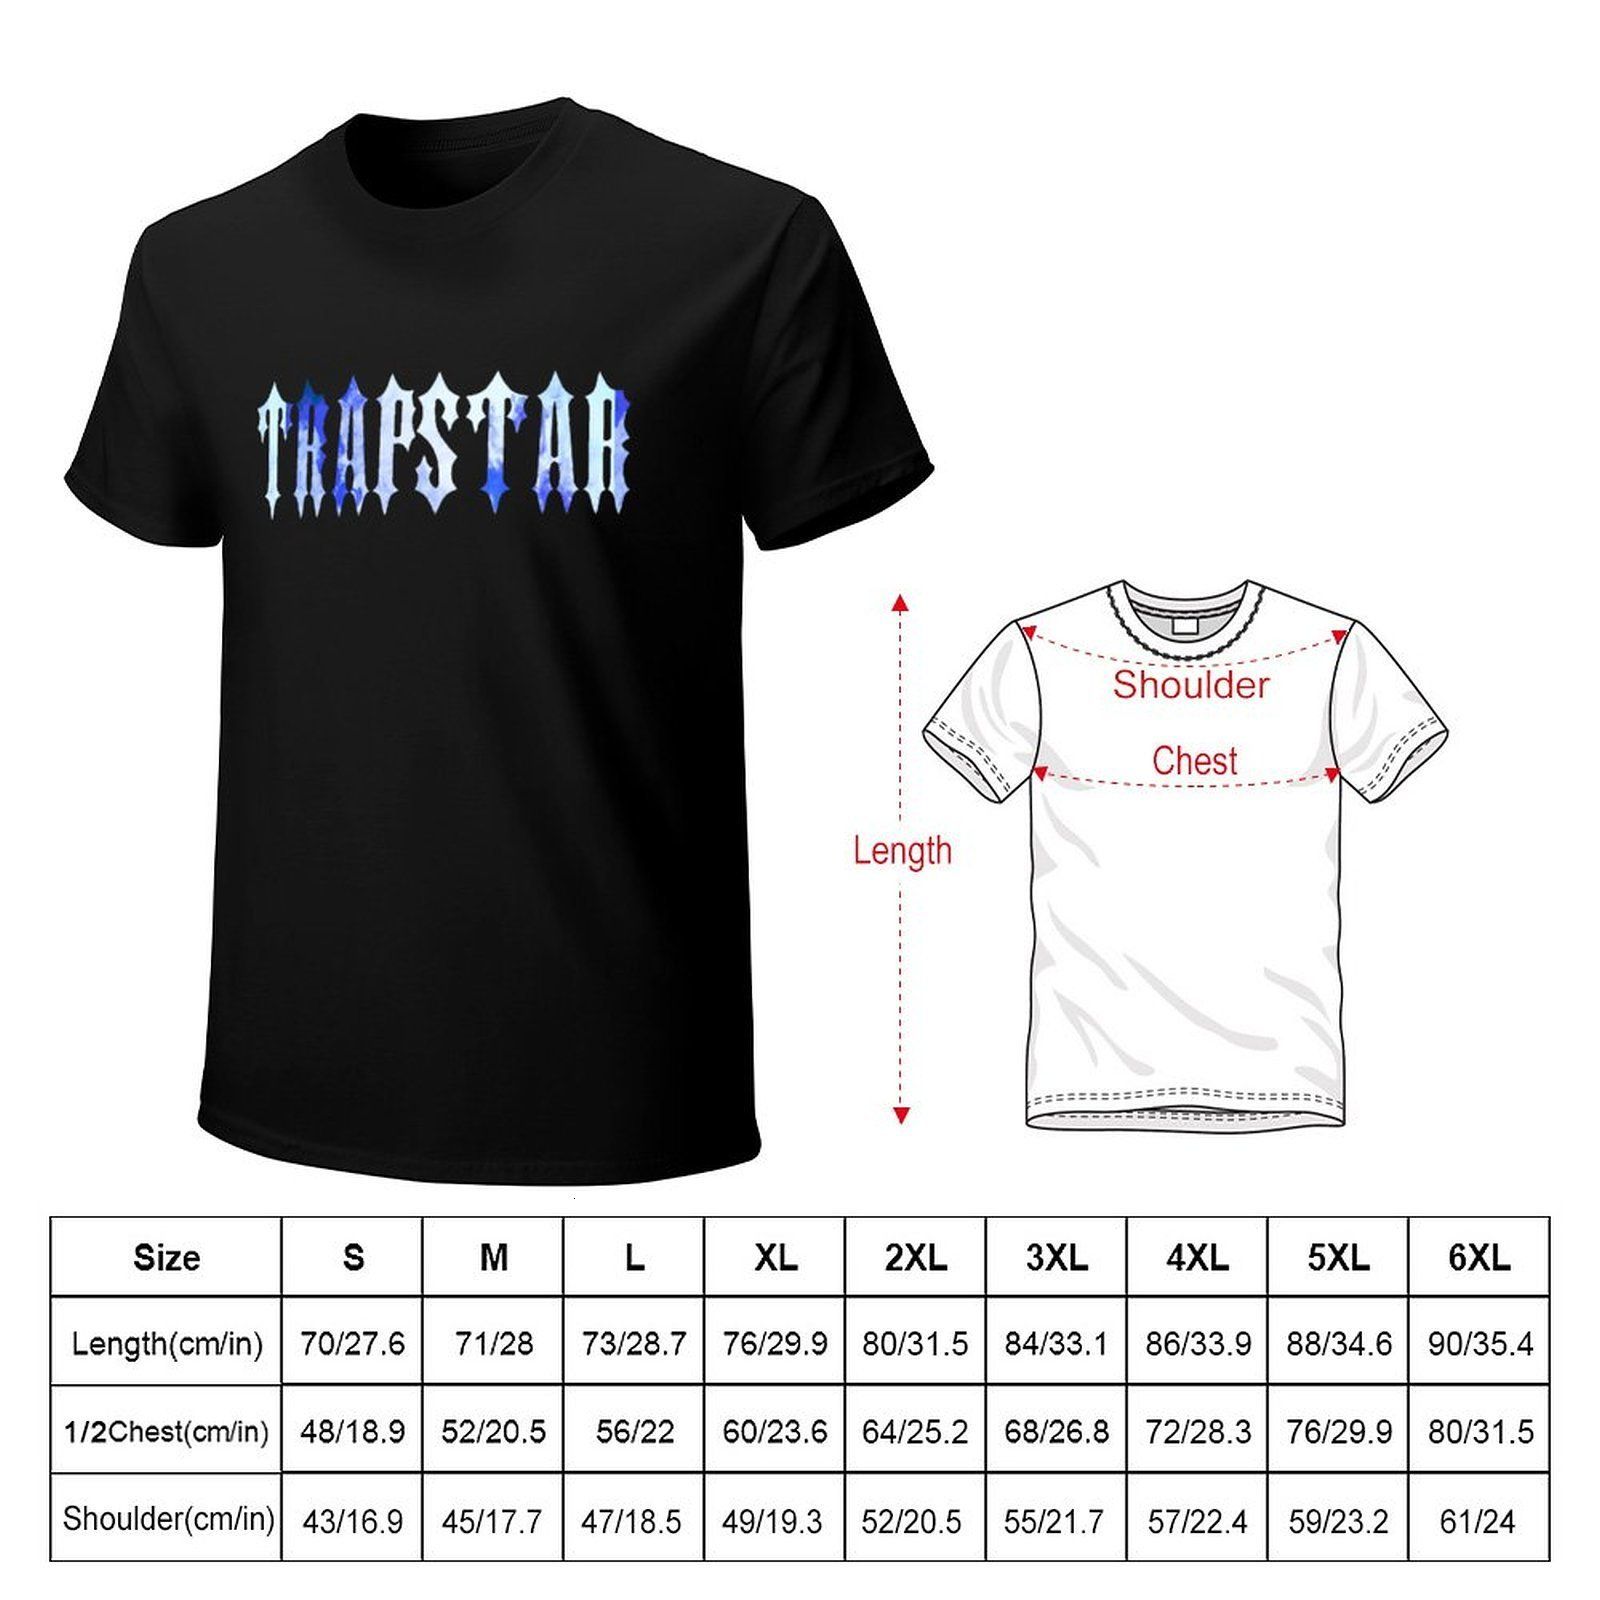 New Shirt Trapstar London Logo Men's Black T-Shirt USA Size S to 5XL